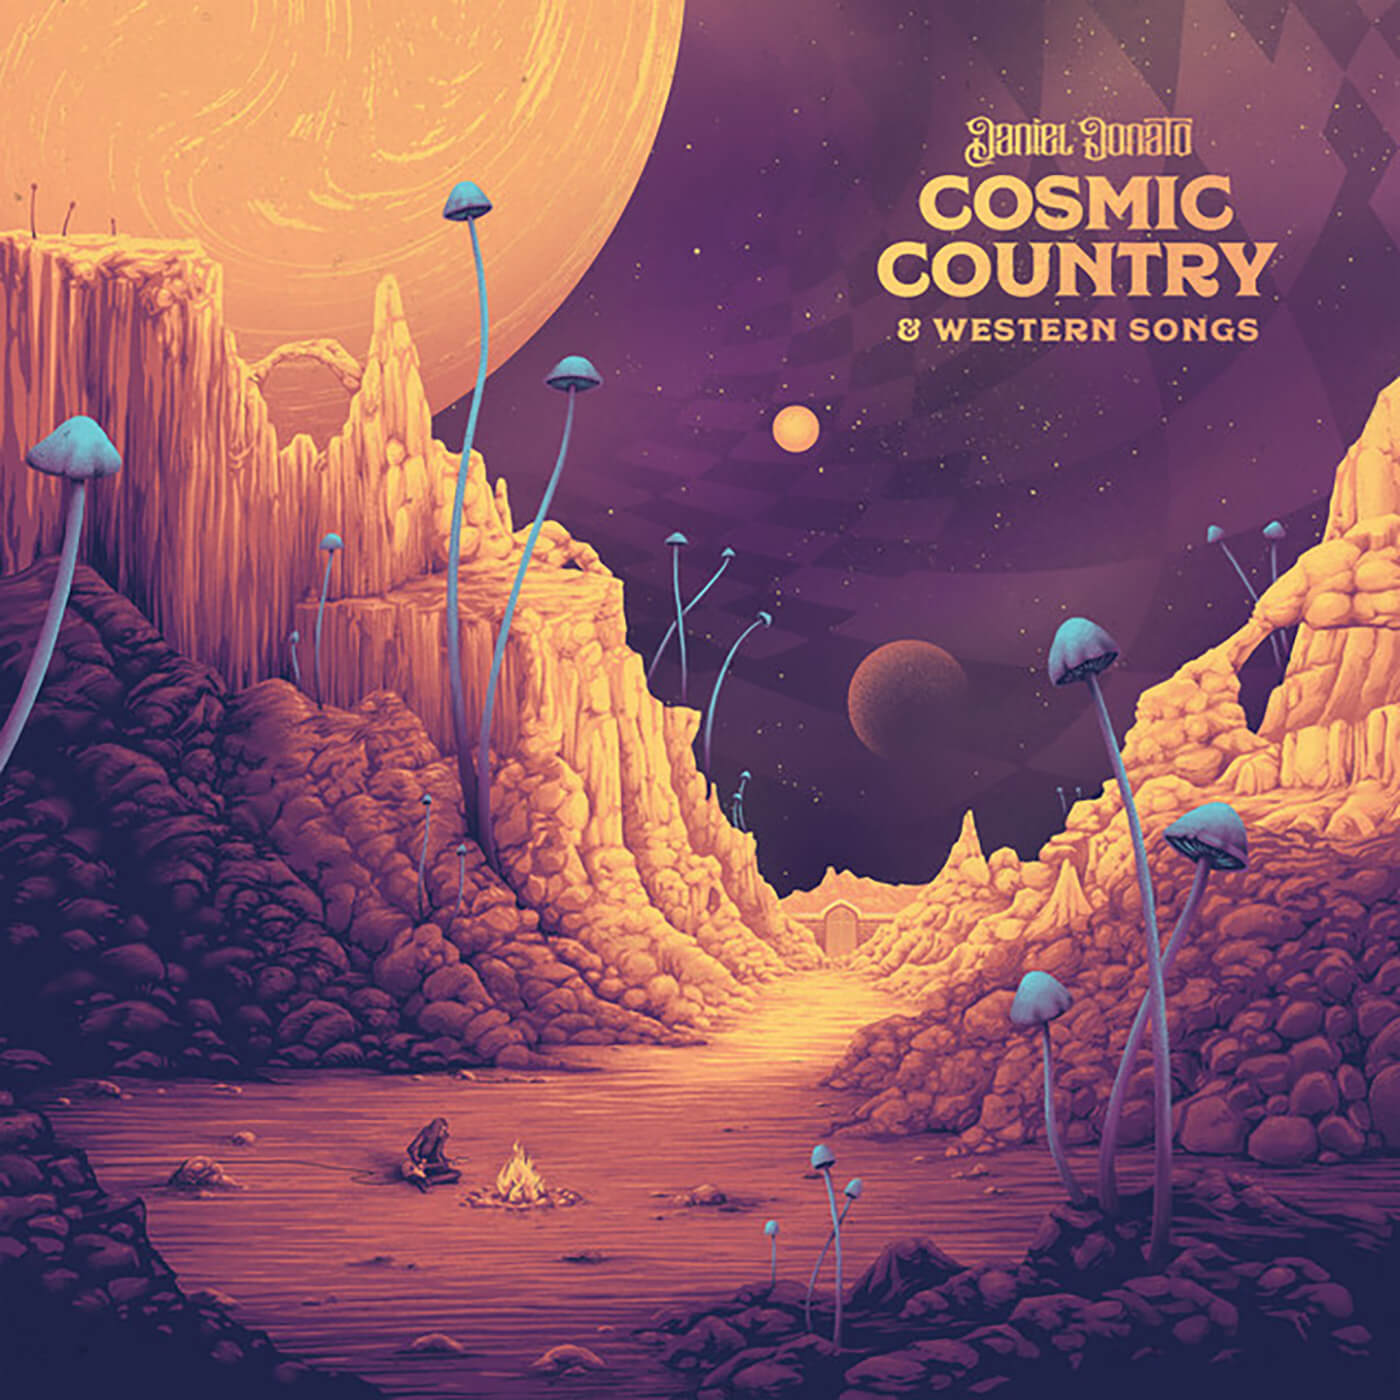 Daniel Donato - Cosmic Country & Western Songs